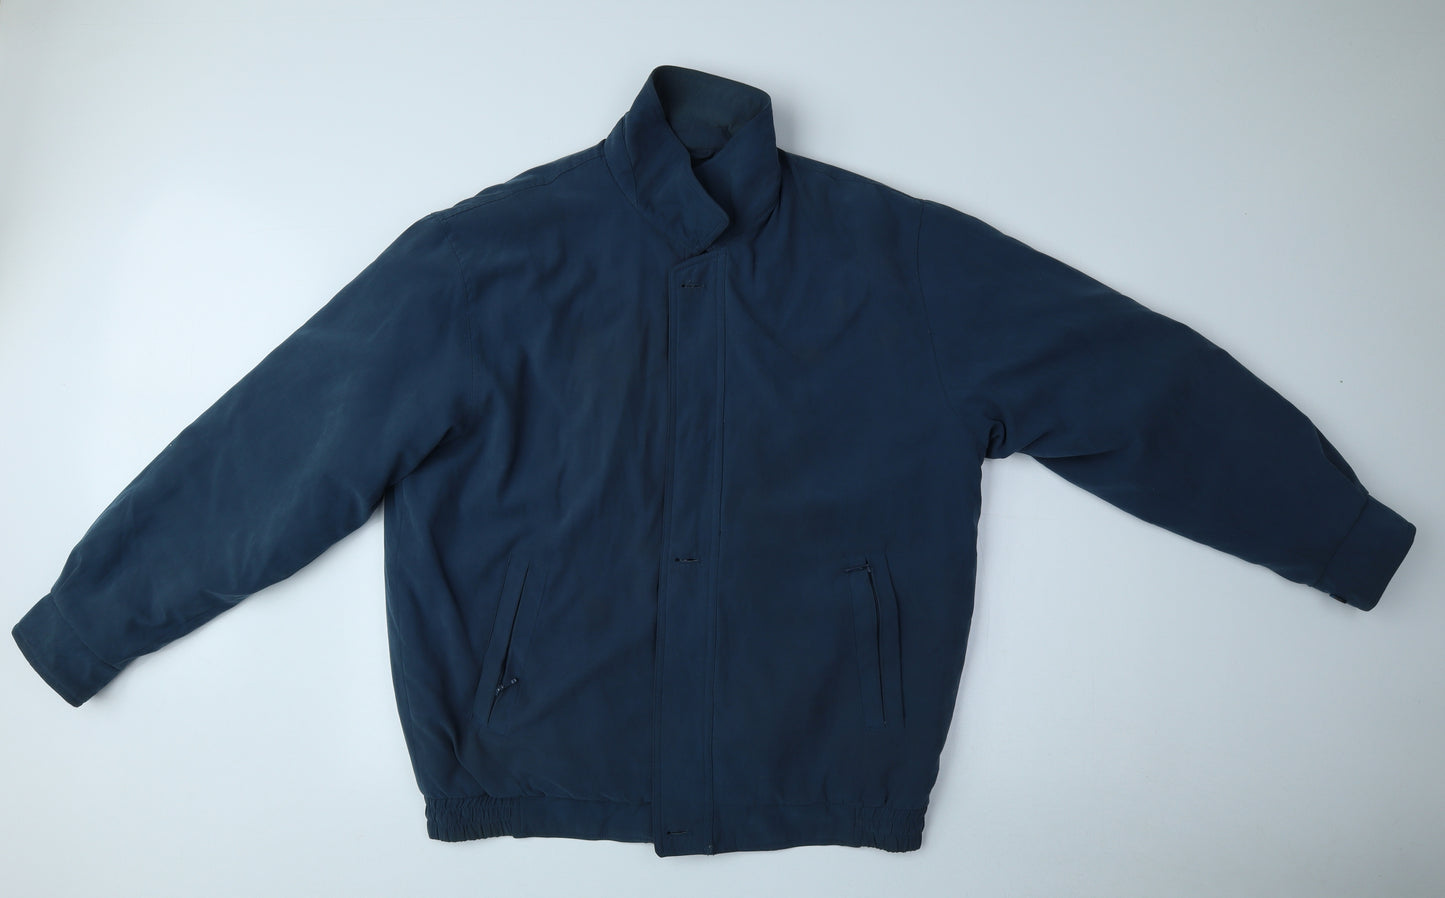 Weatherguard Mens Blue Jacket Coat Size M Zip